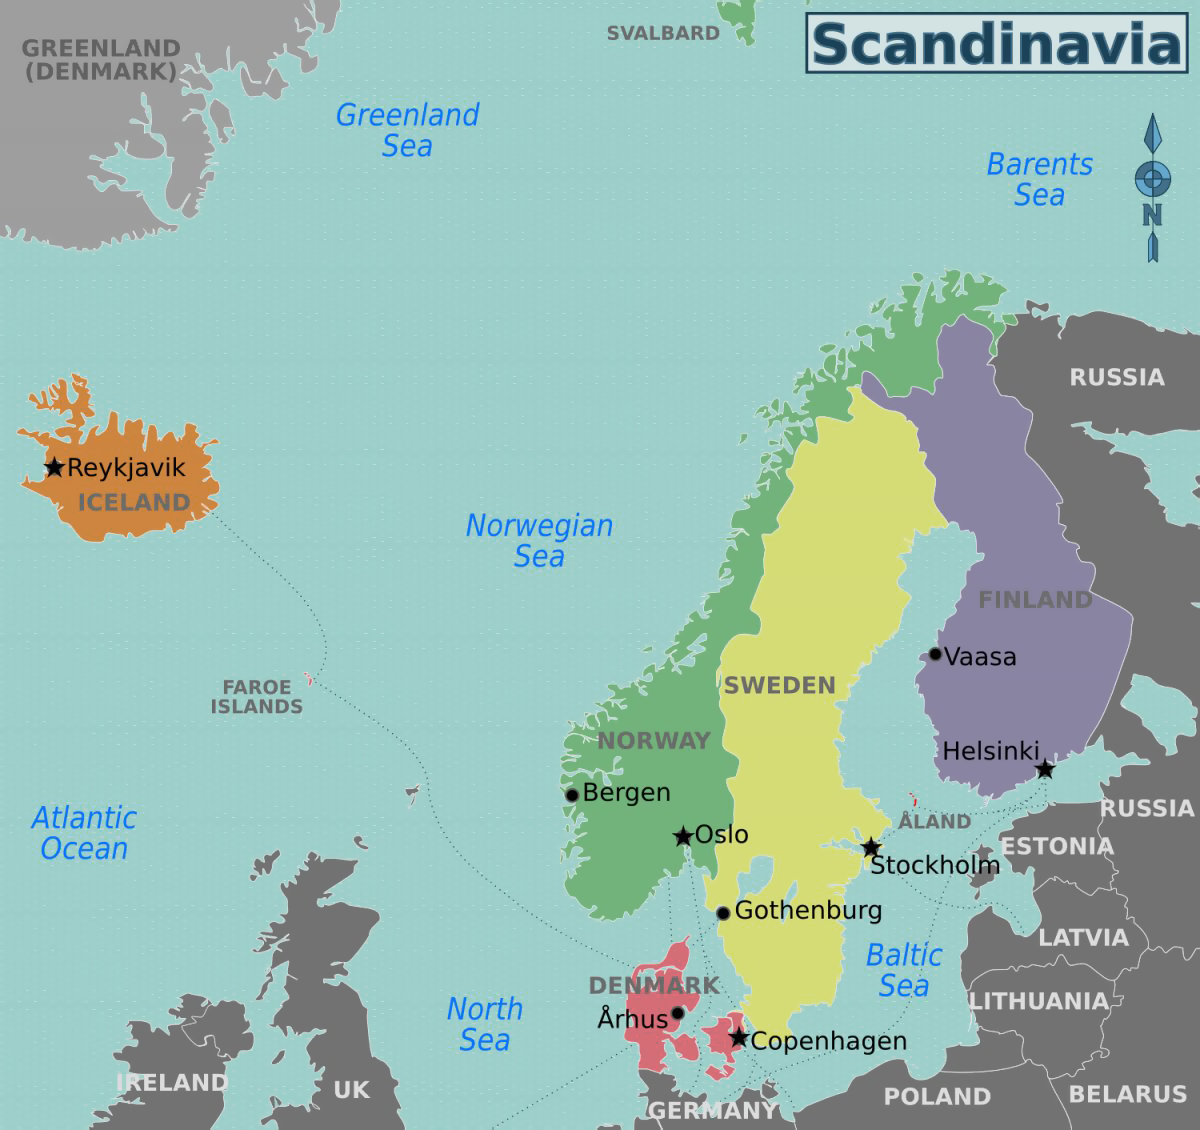 large-regions-map-of-scandinavia-baltic-and-scandinavia-europe